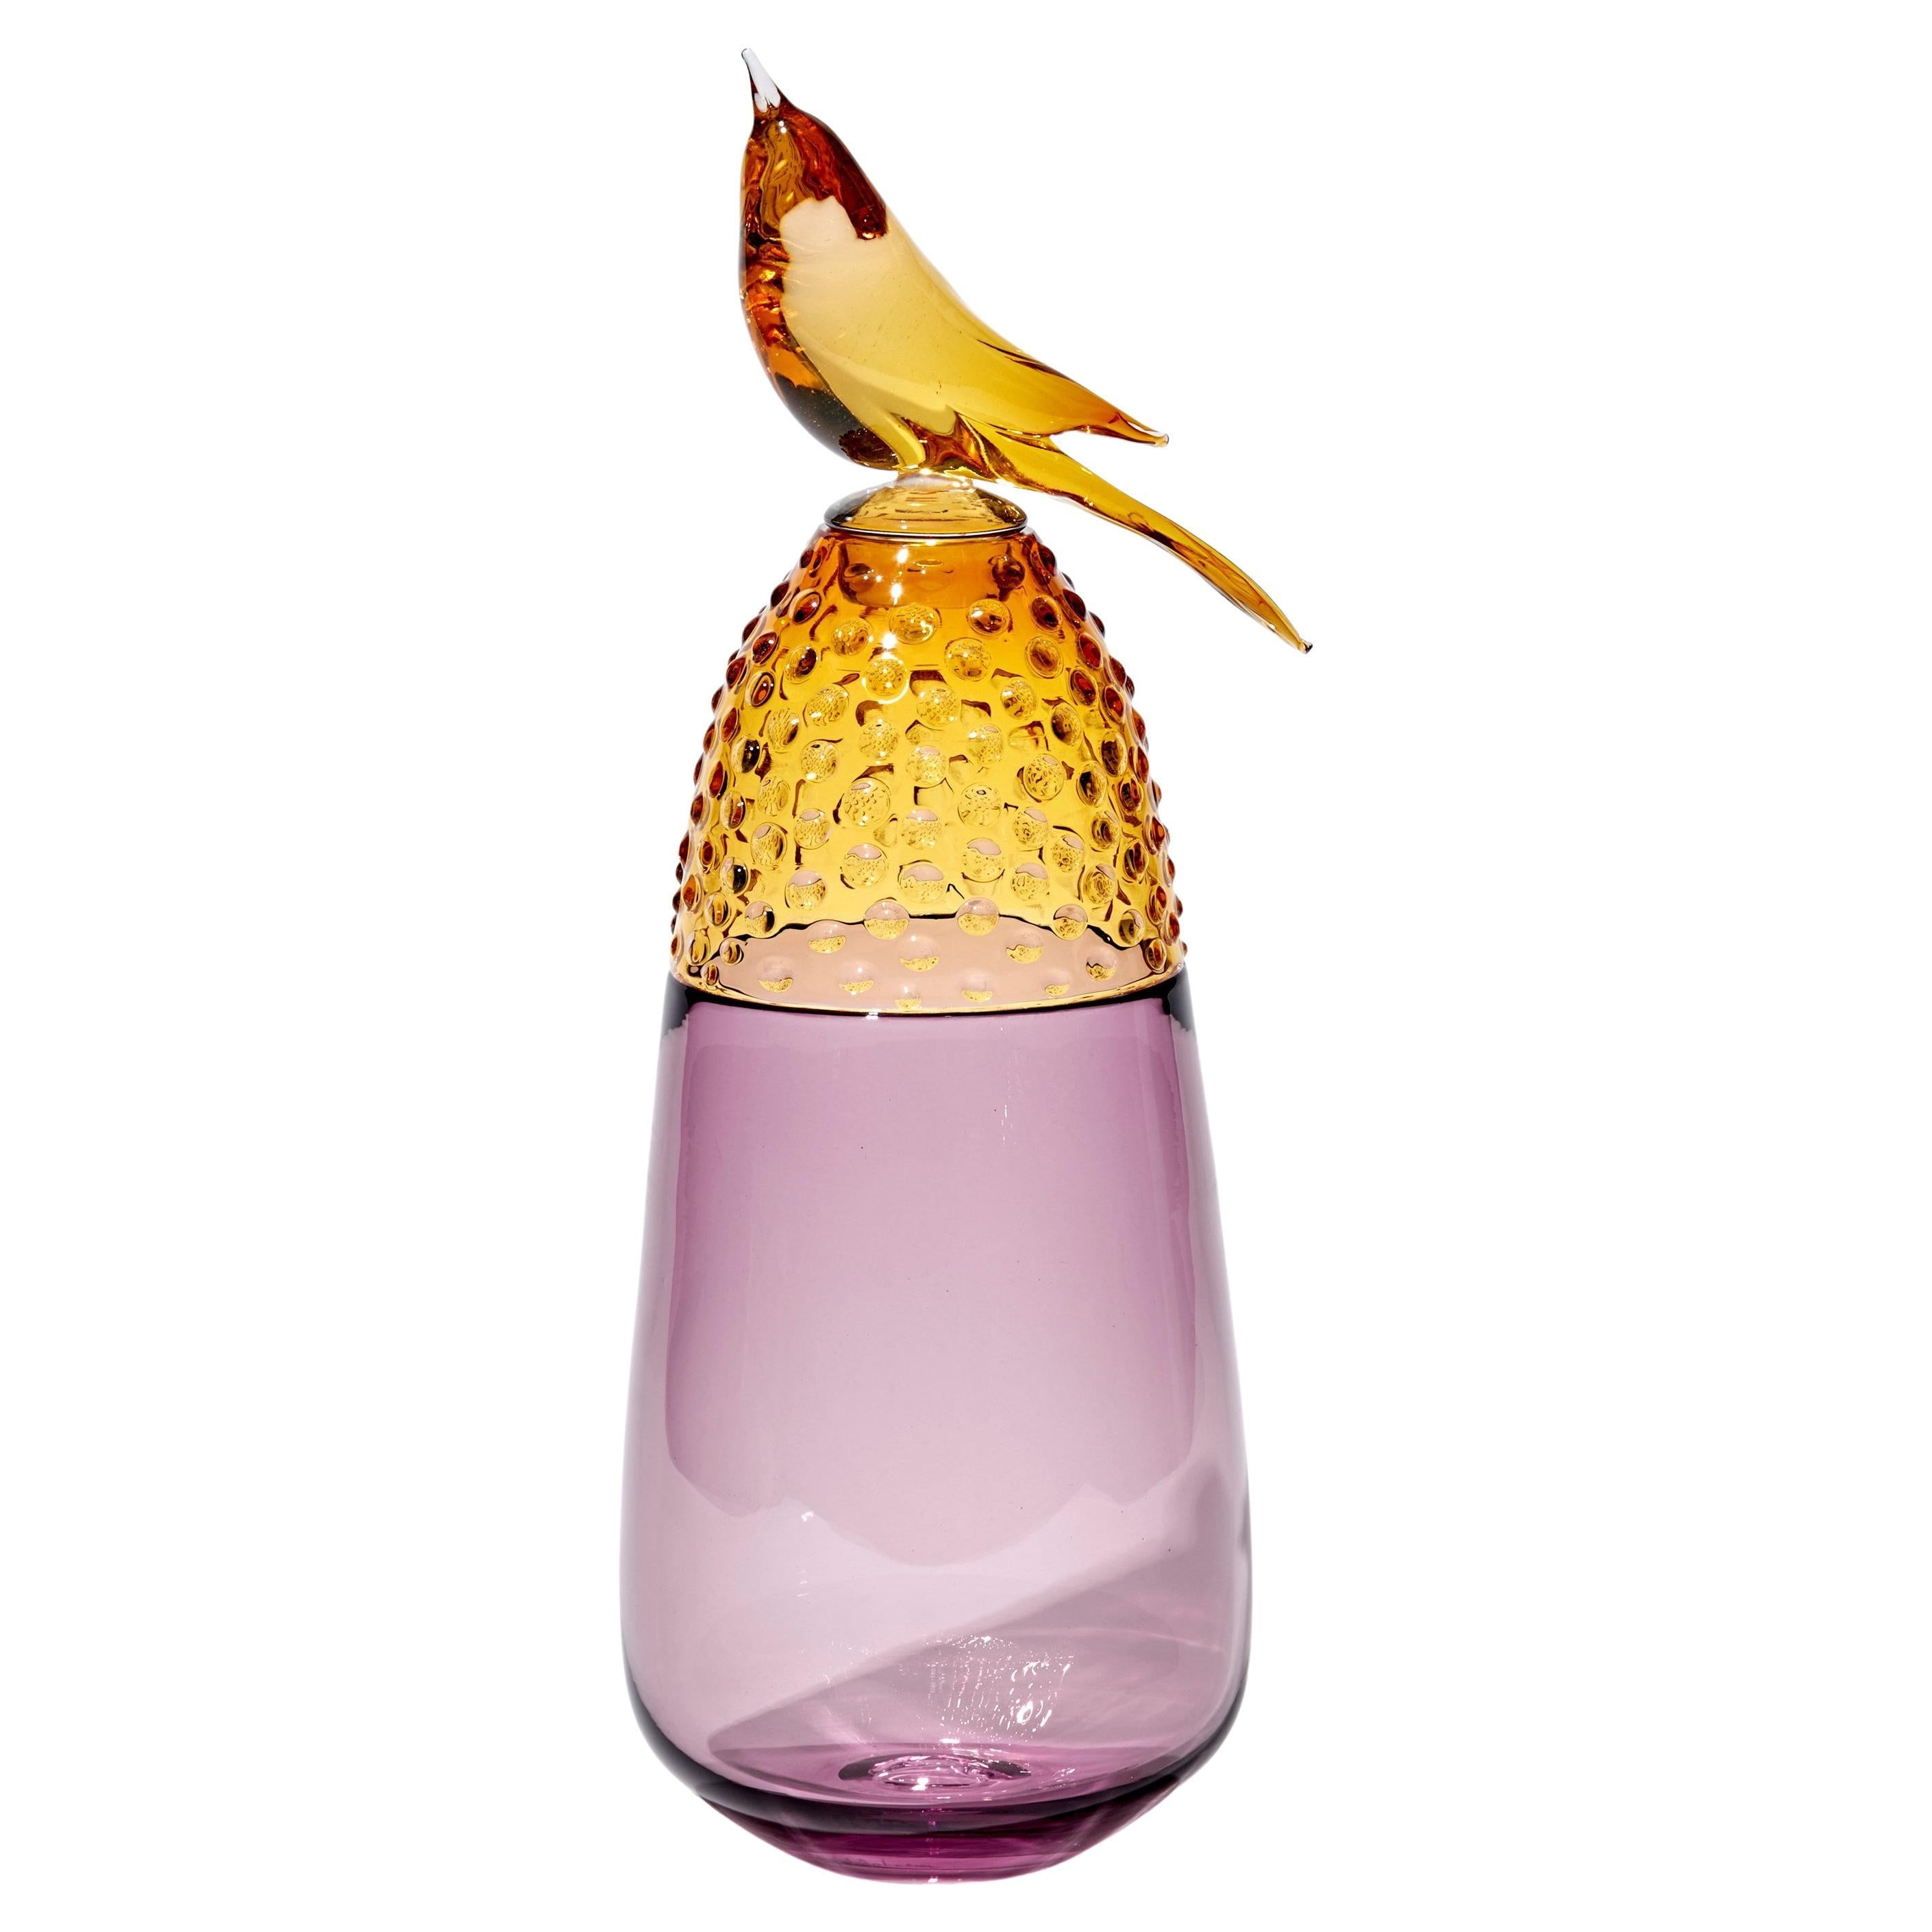 All about Birds XIV, a Purple & Amber Glass Sculpture with Bird by Julie Johnson